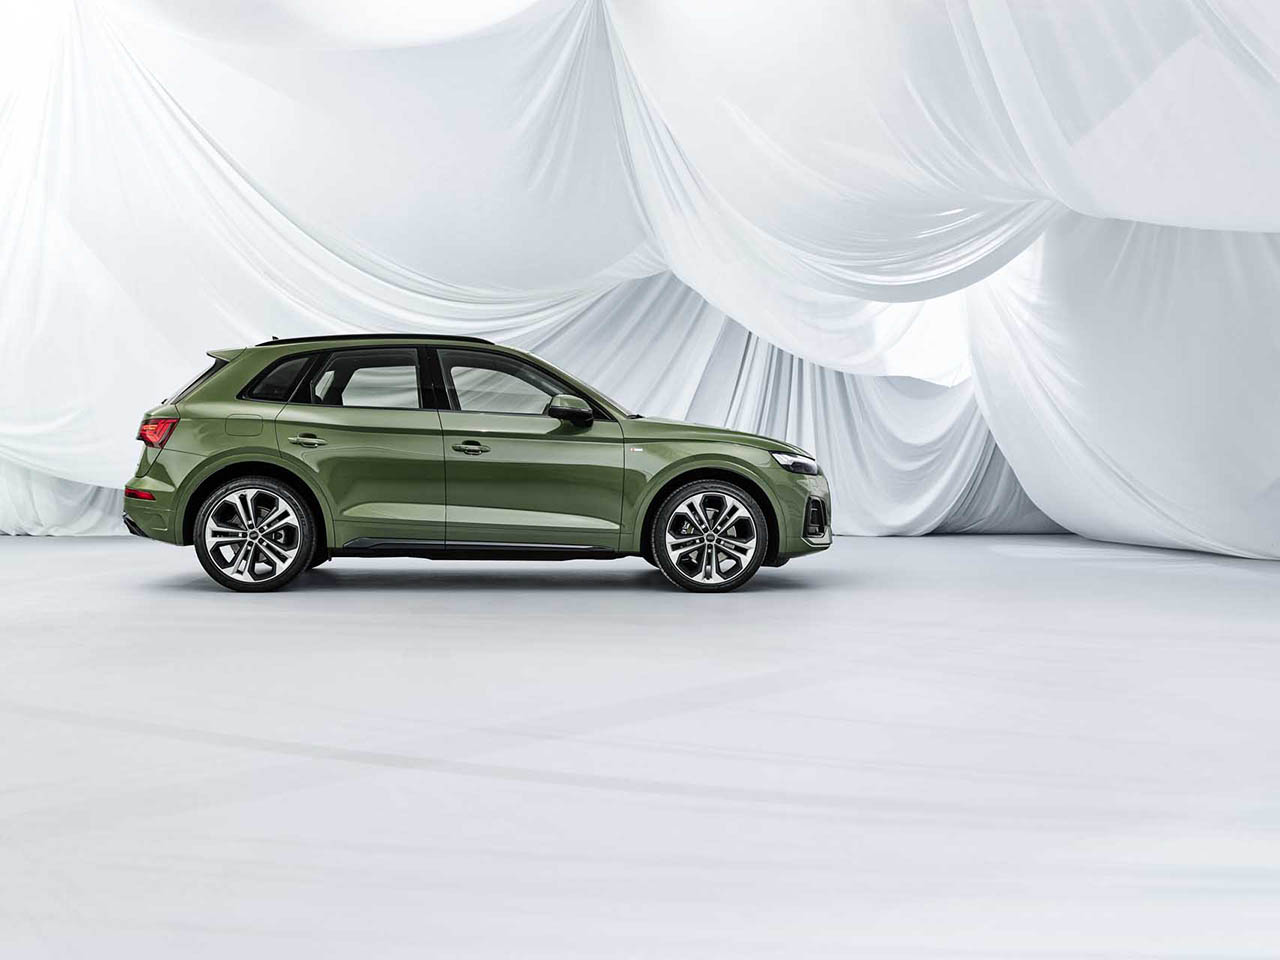 New Audi Q5 unveiled, India launch in 2021